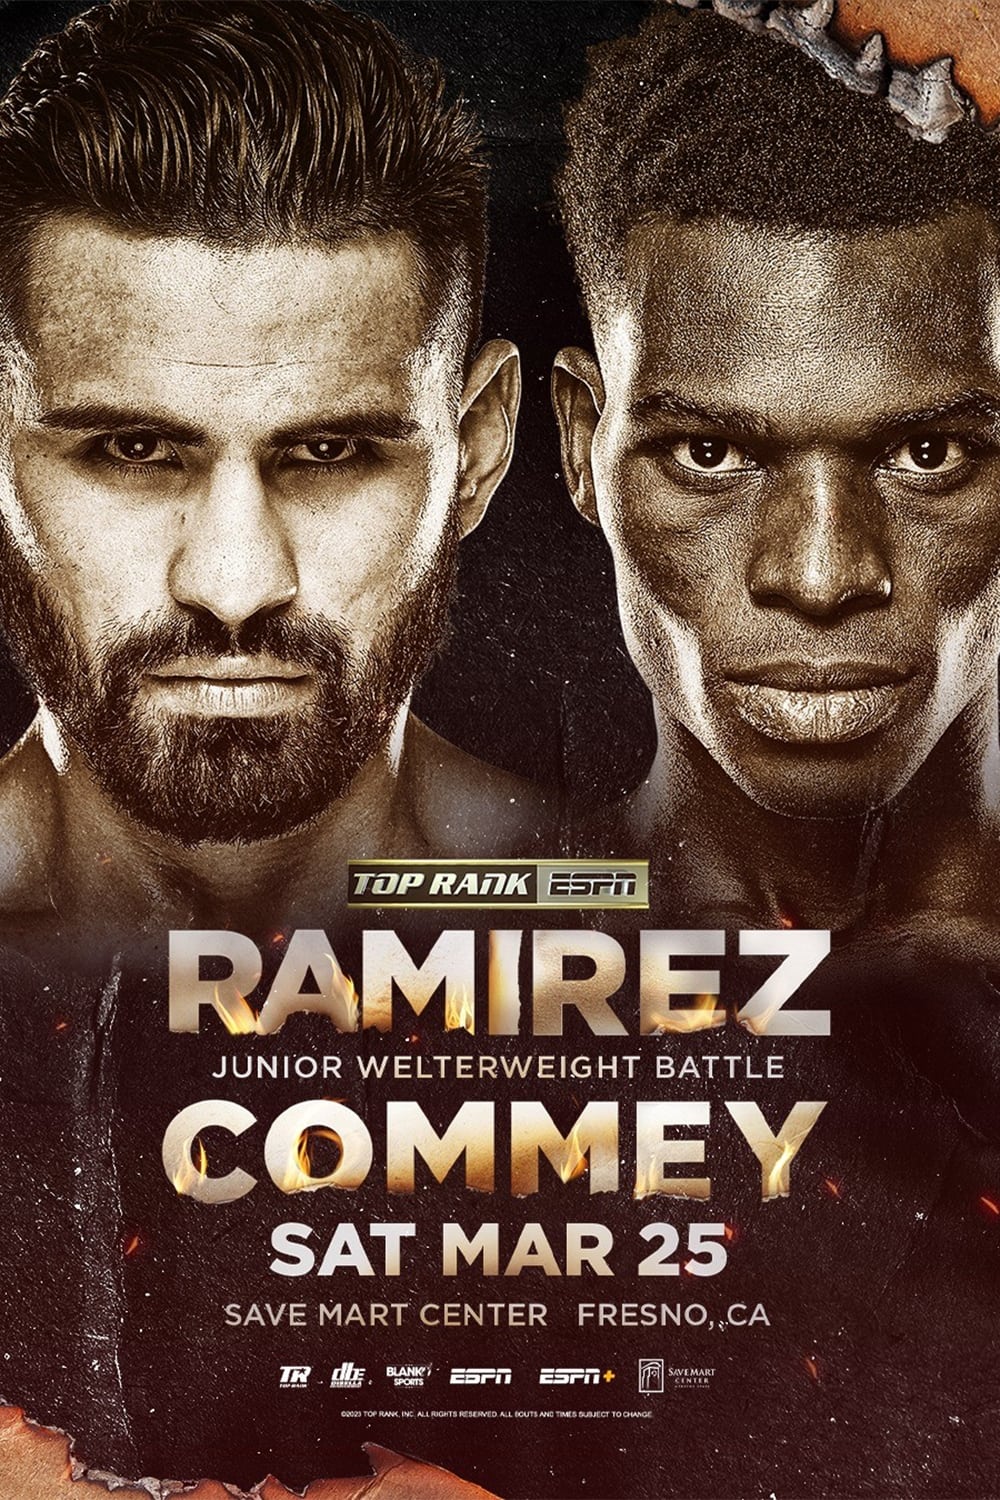 Jose Ramirez vs. Richard Commey